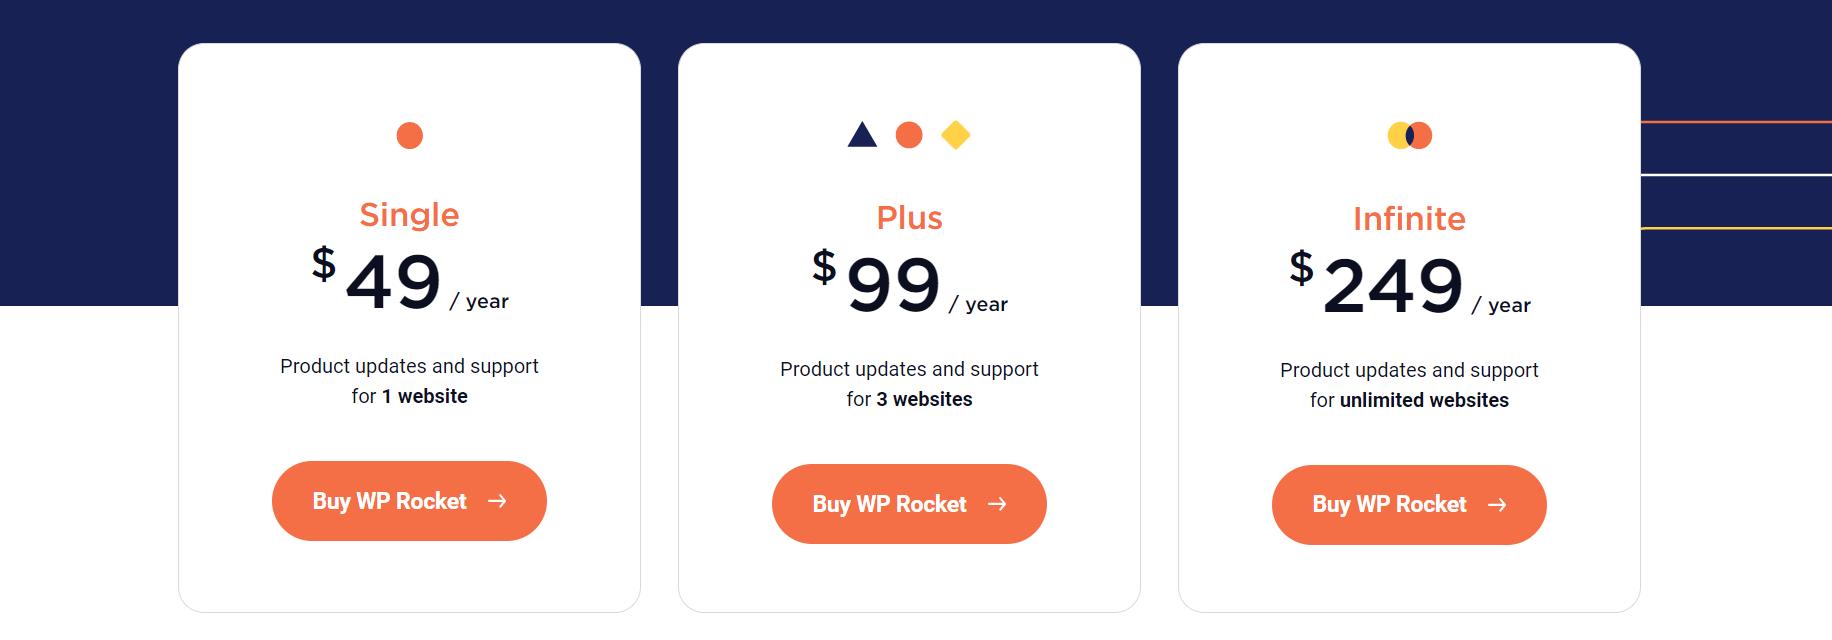 WP Rocket Prices